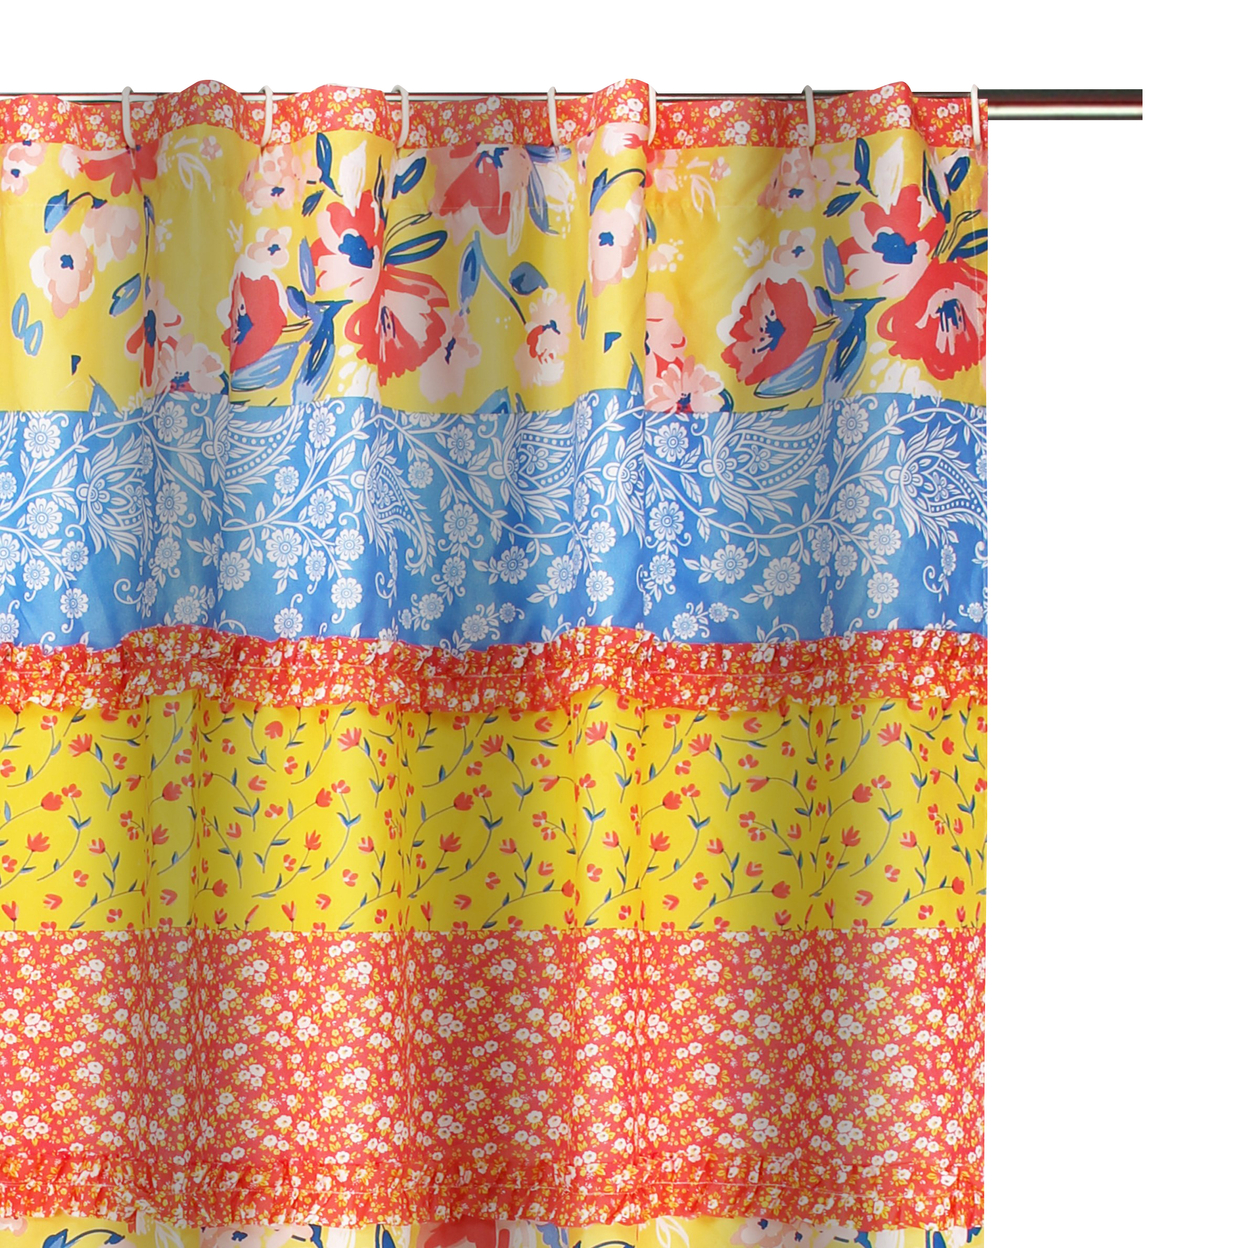 Lio 72 X 72 Inch Shower Curtain, Ruffled Rows, Bohemian Multicolor